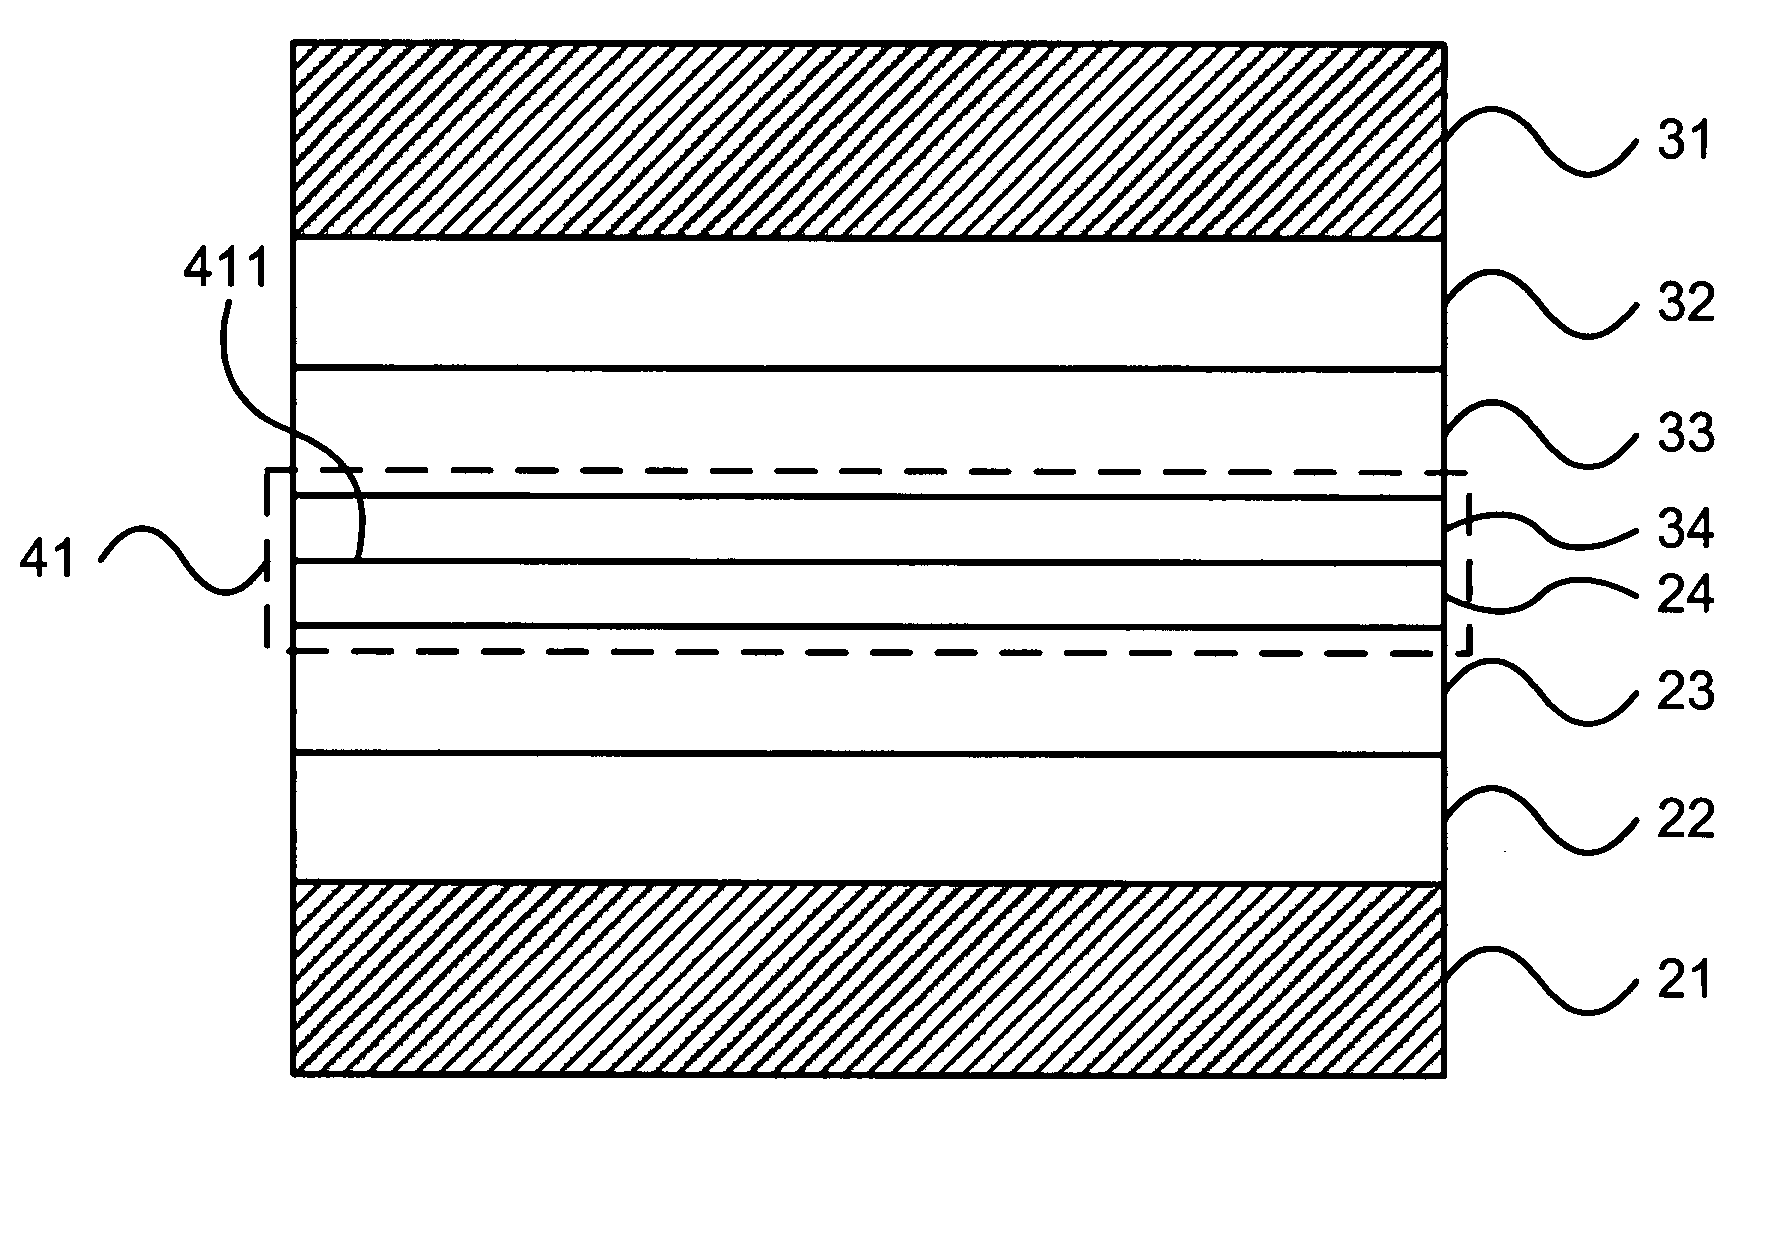 Method of low temperature wafer bonding through Au/Ag diffusion